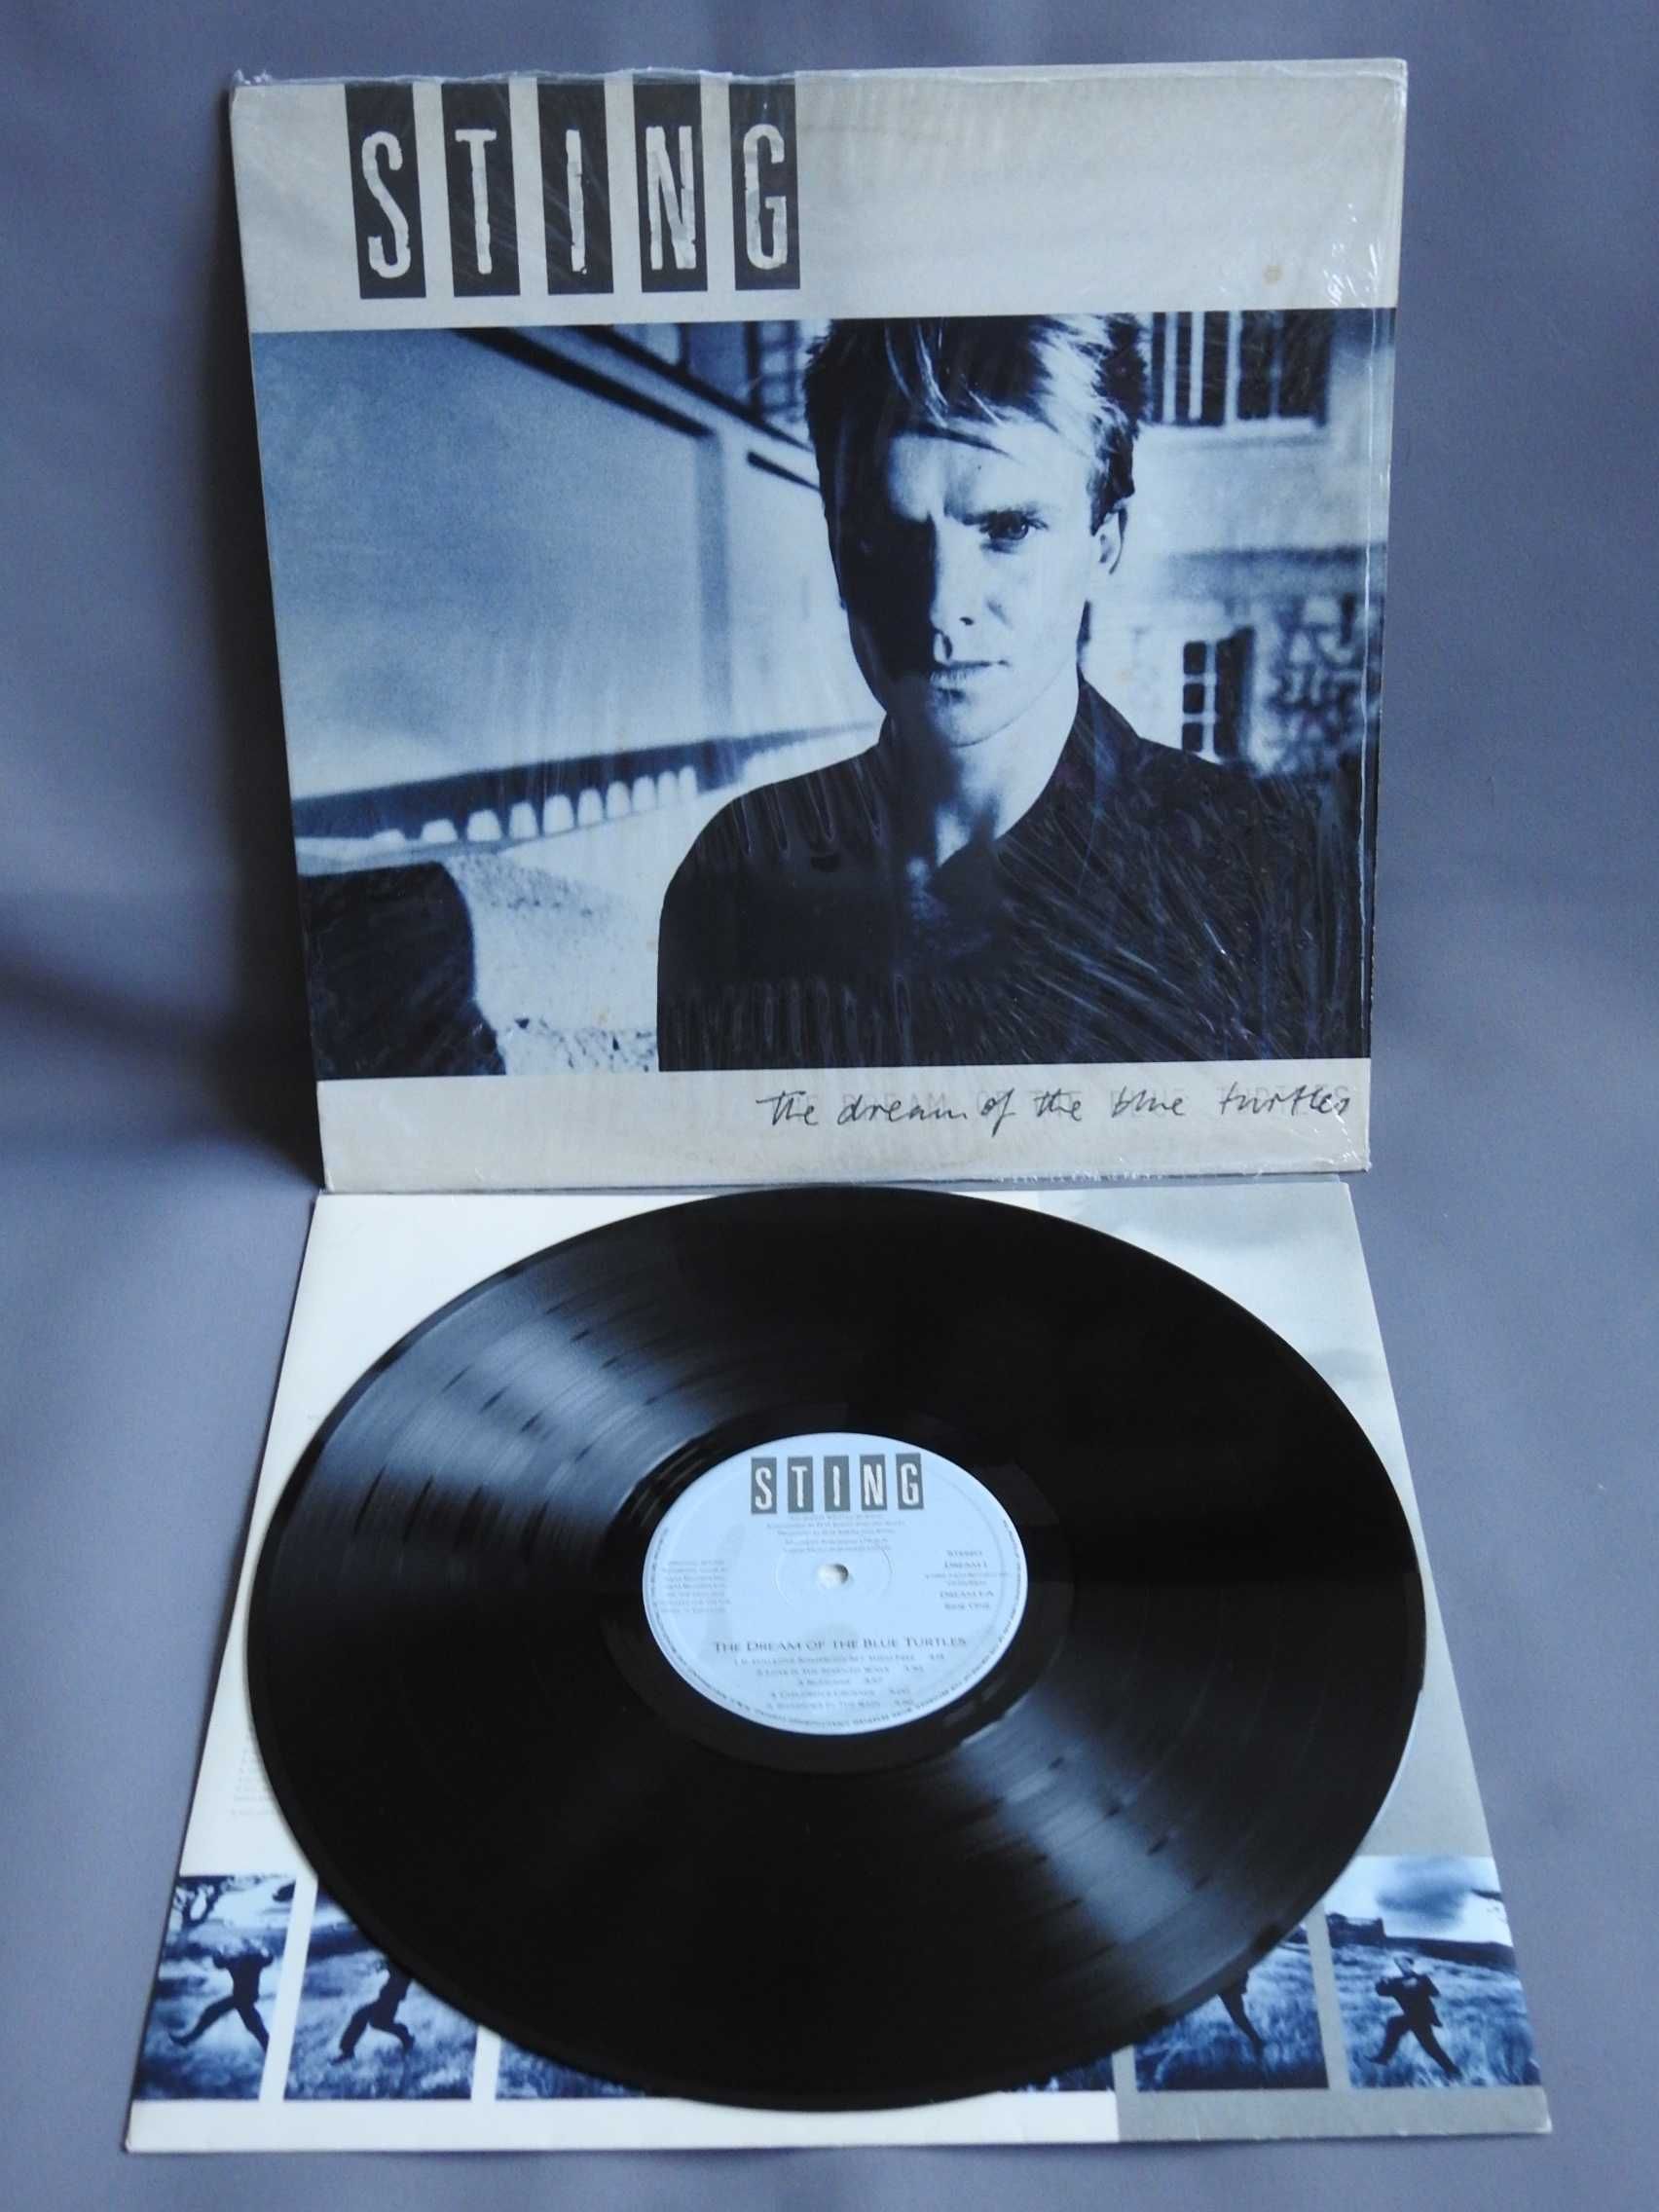 Sting The Dream Of The Blue Turtles LP 1985 UK пластинка Британия EX